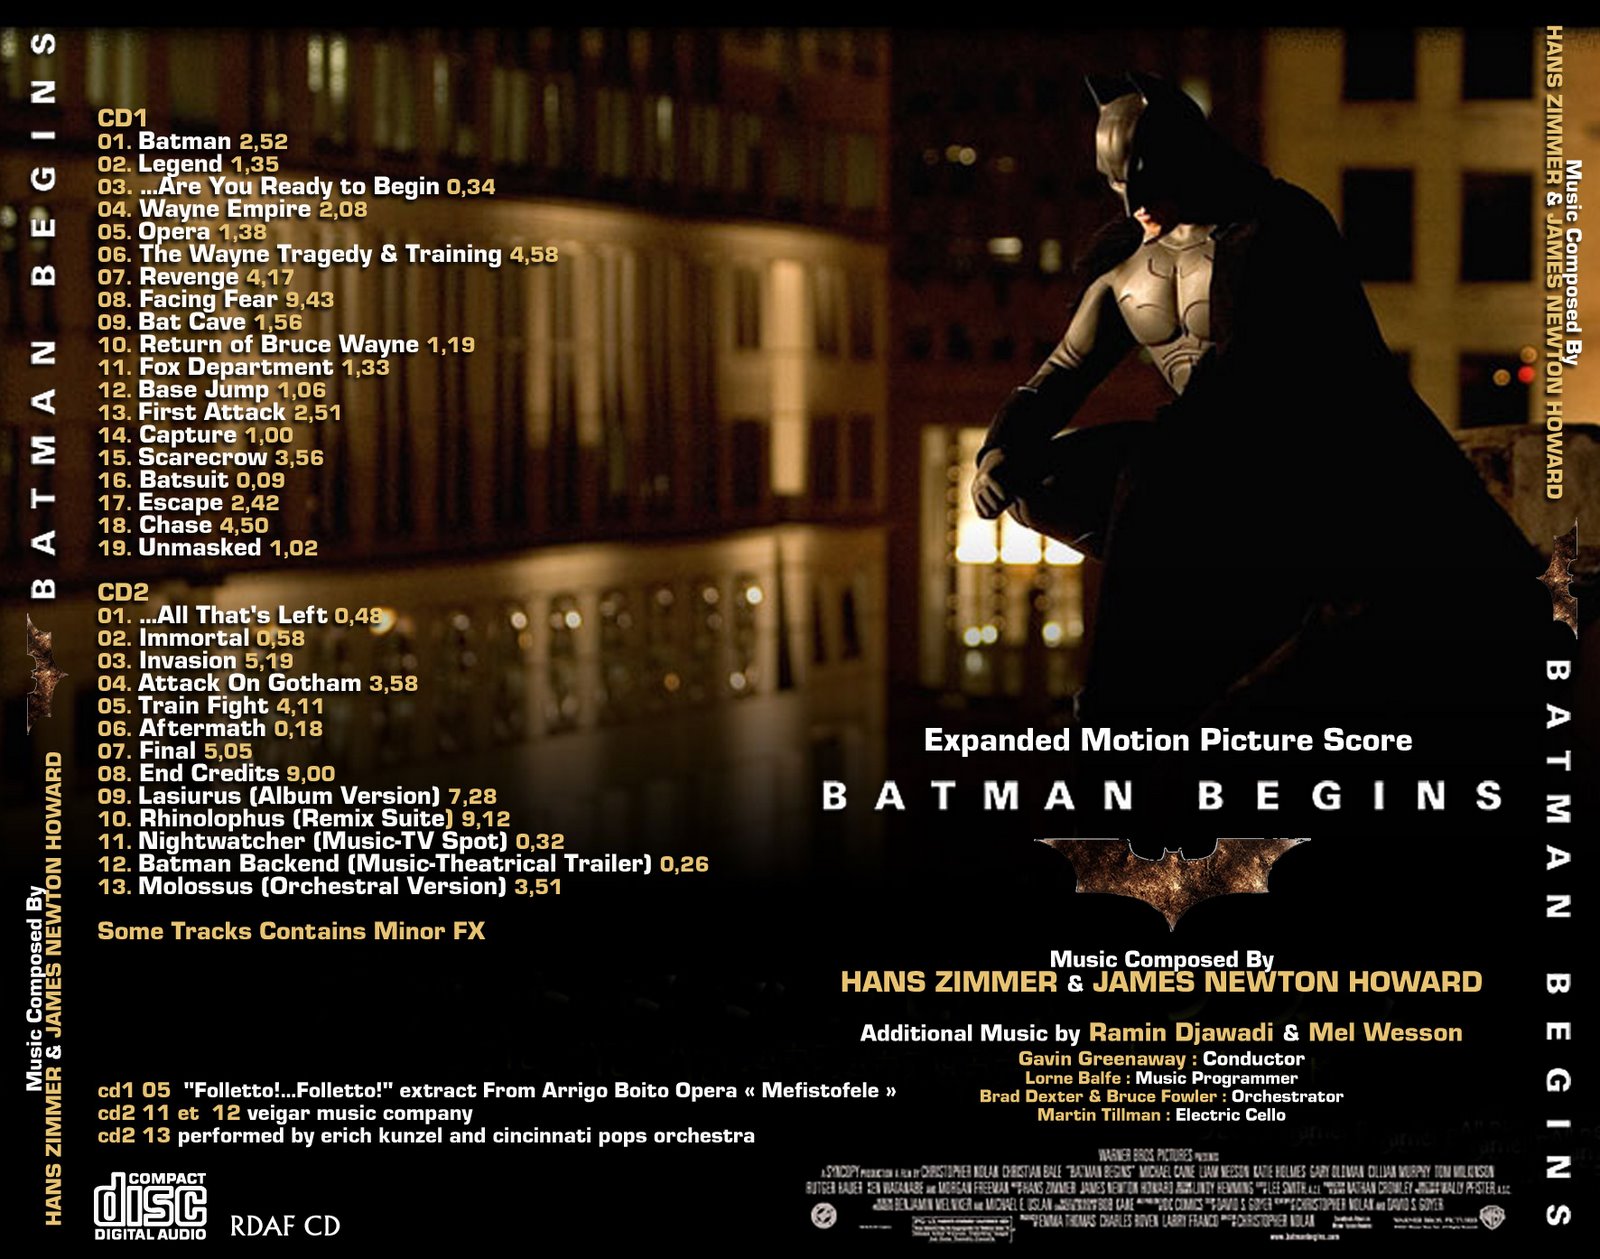 DKN Remembers 'Batman Begins' - 10 Years on - Dark Knight News